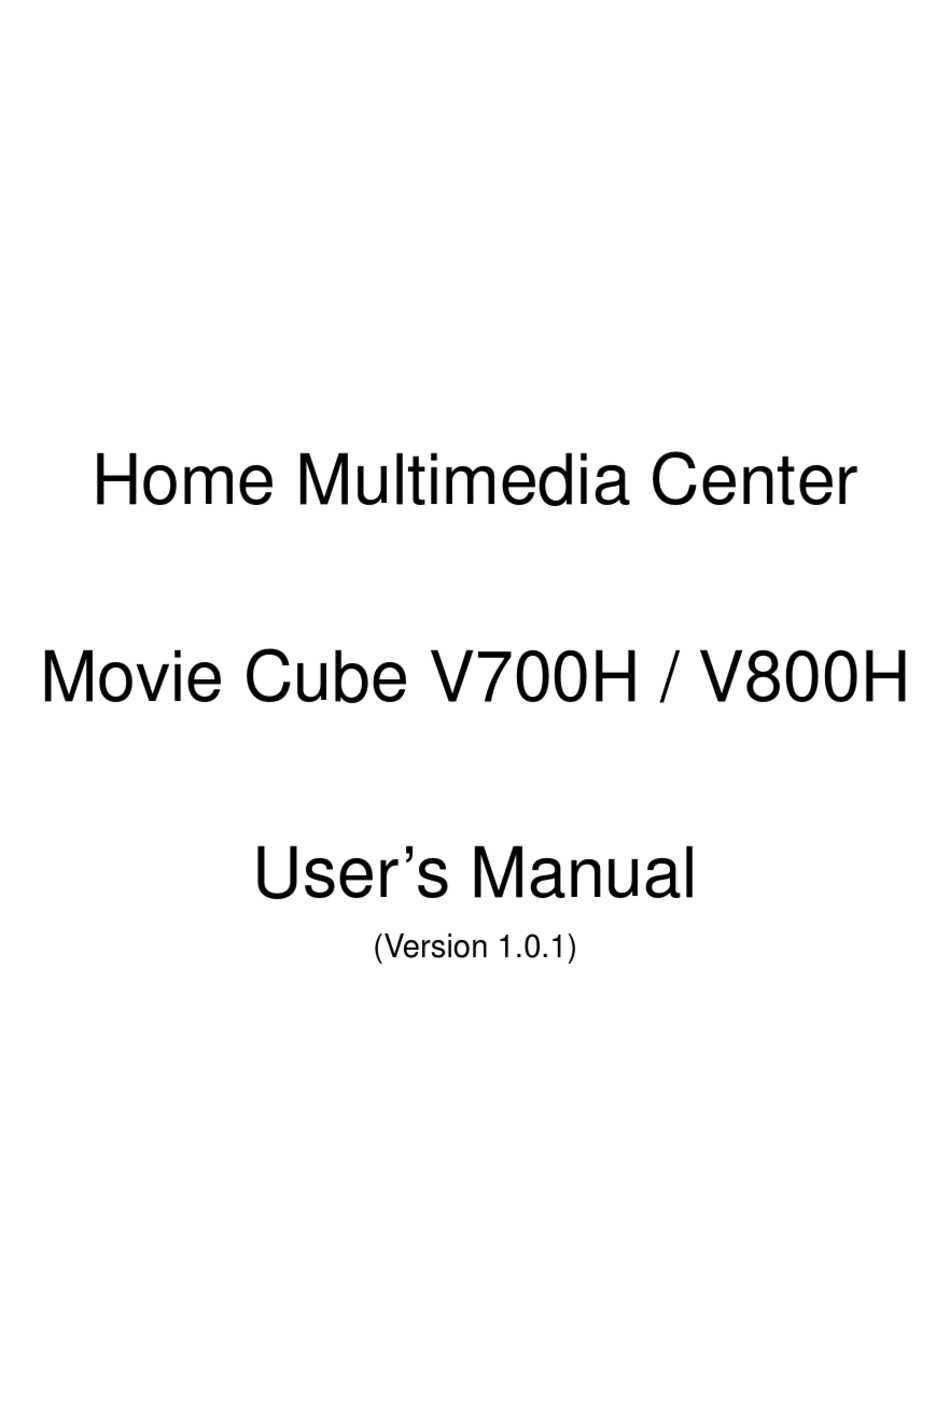 emtec movie cube r100 firmware update